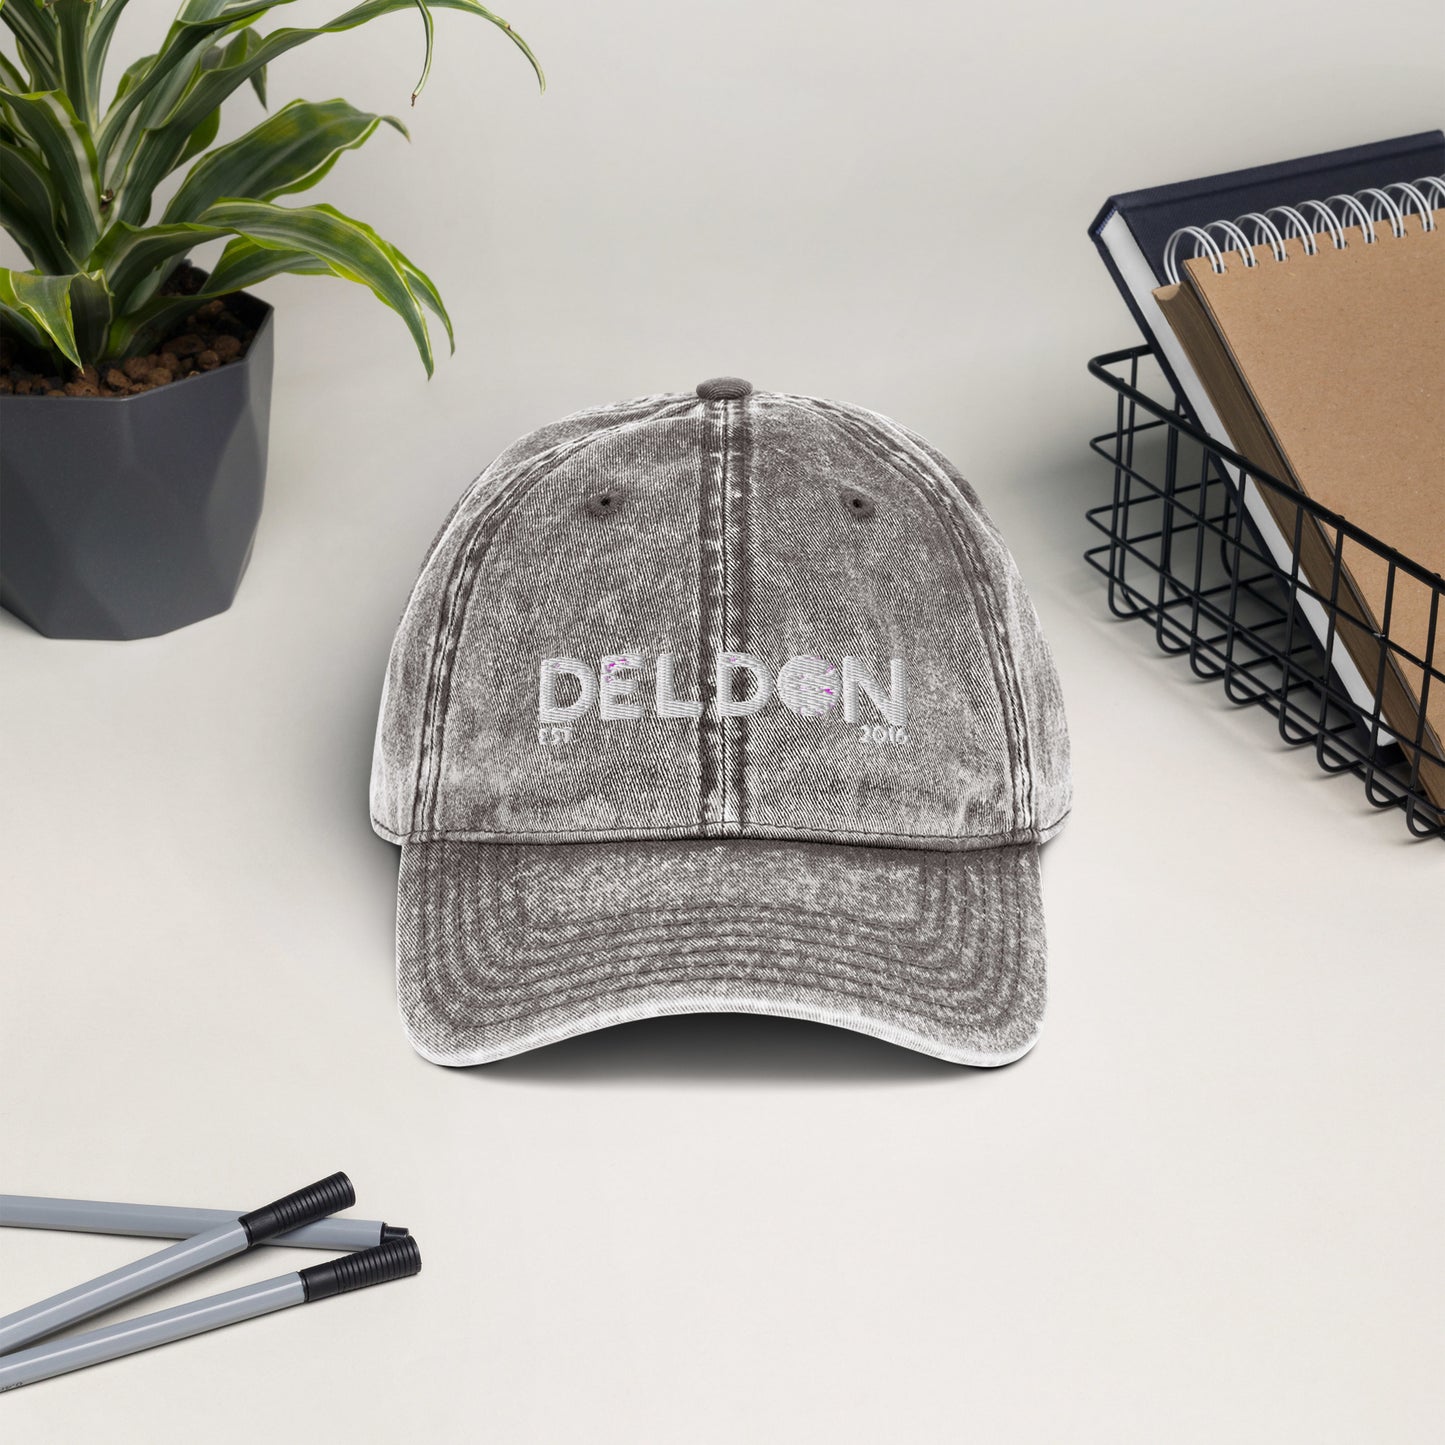 Deldon Vintage Cotton Twill Cap